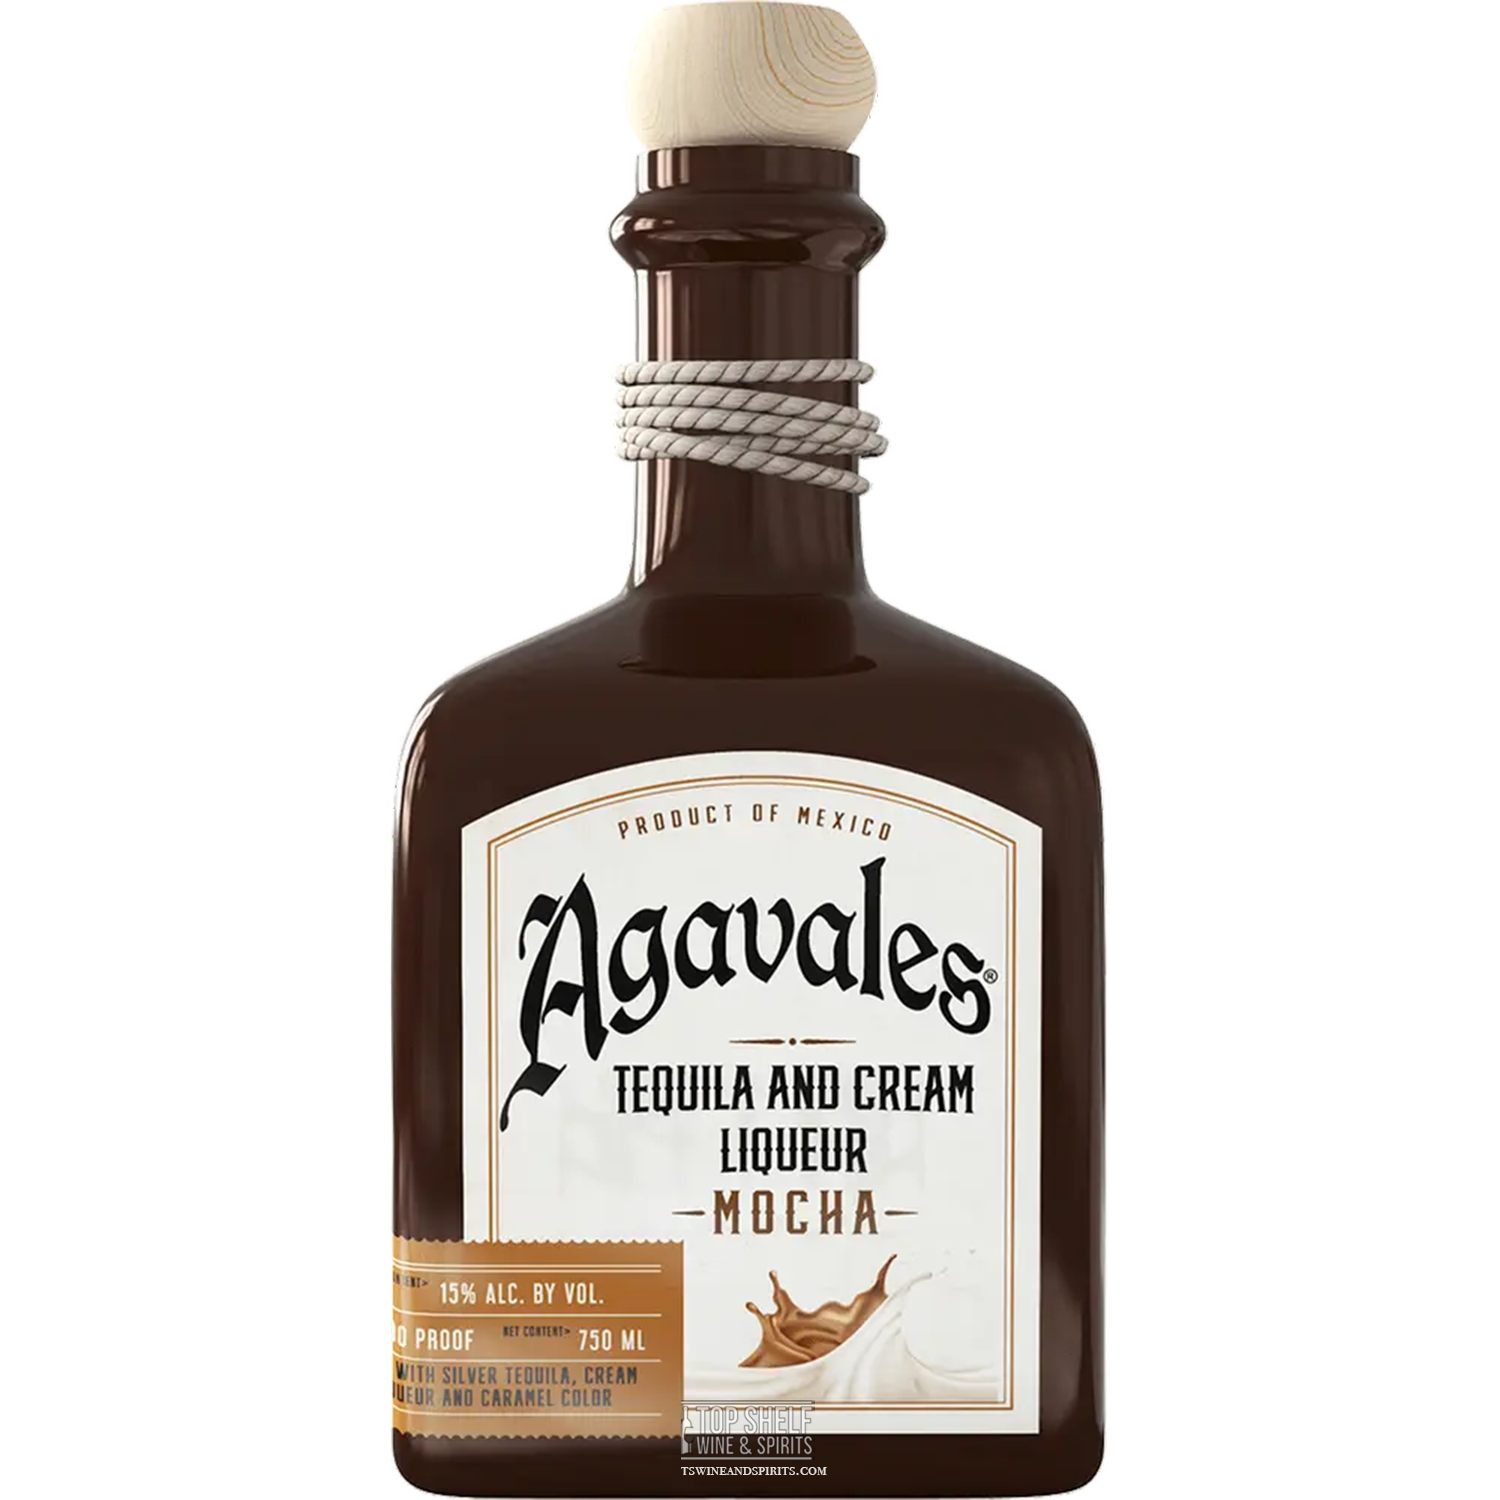 Agavales Tequila and Cream Mocha Liqueur